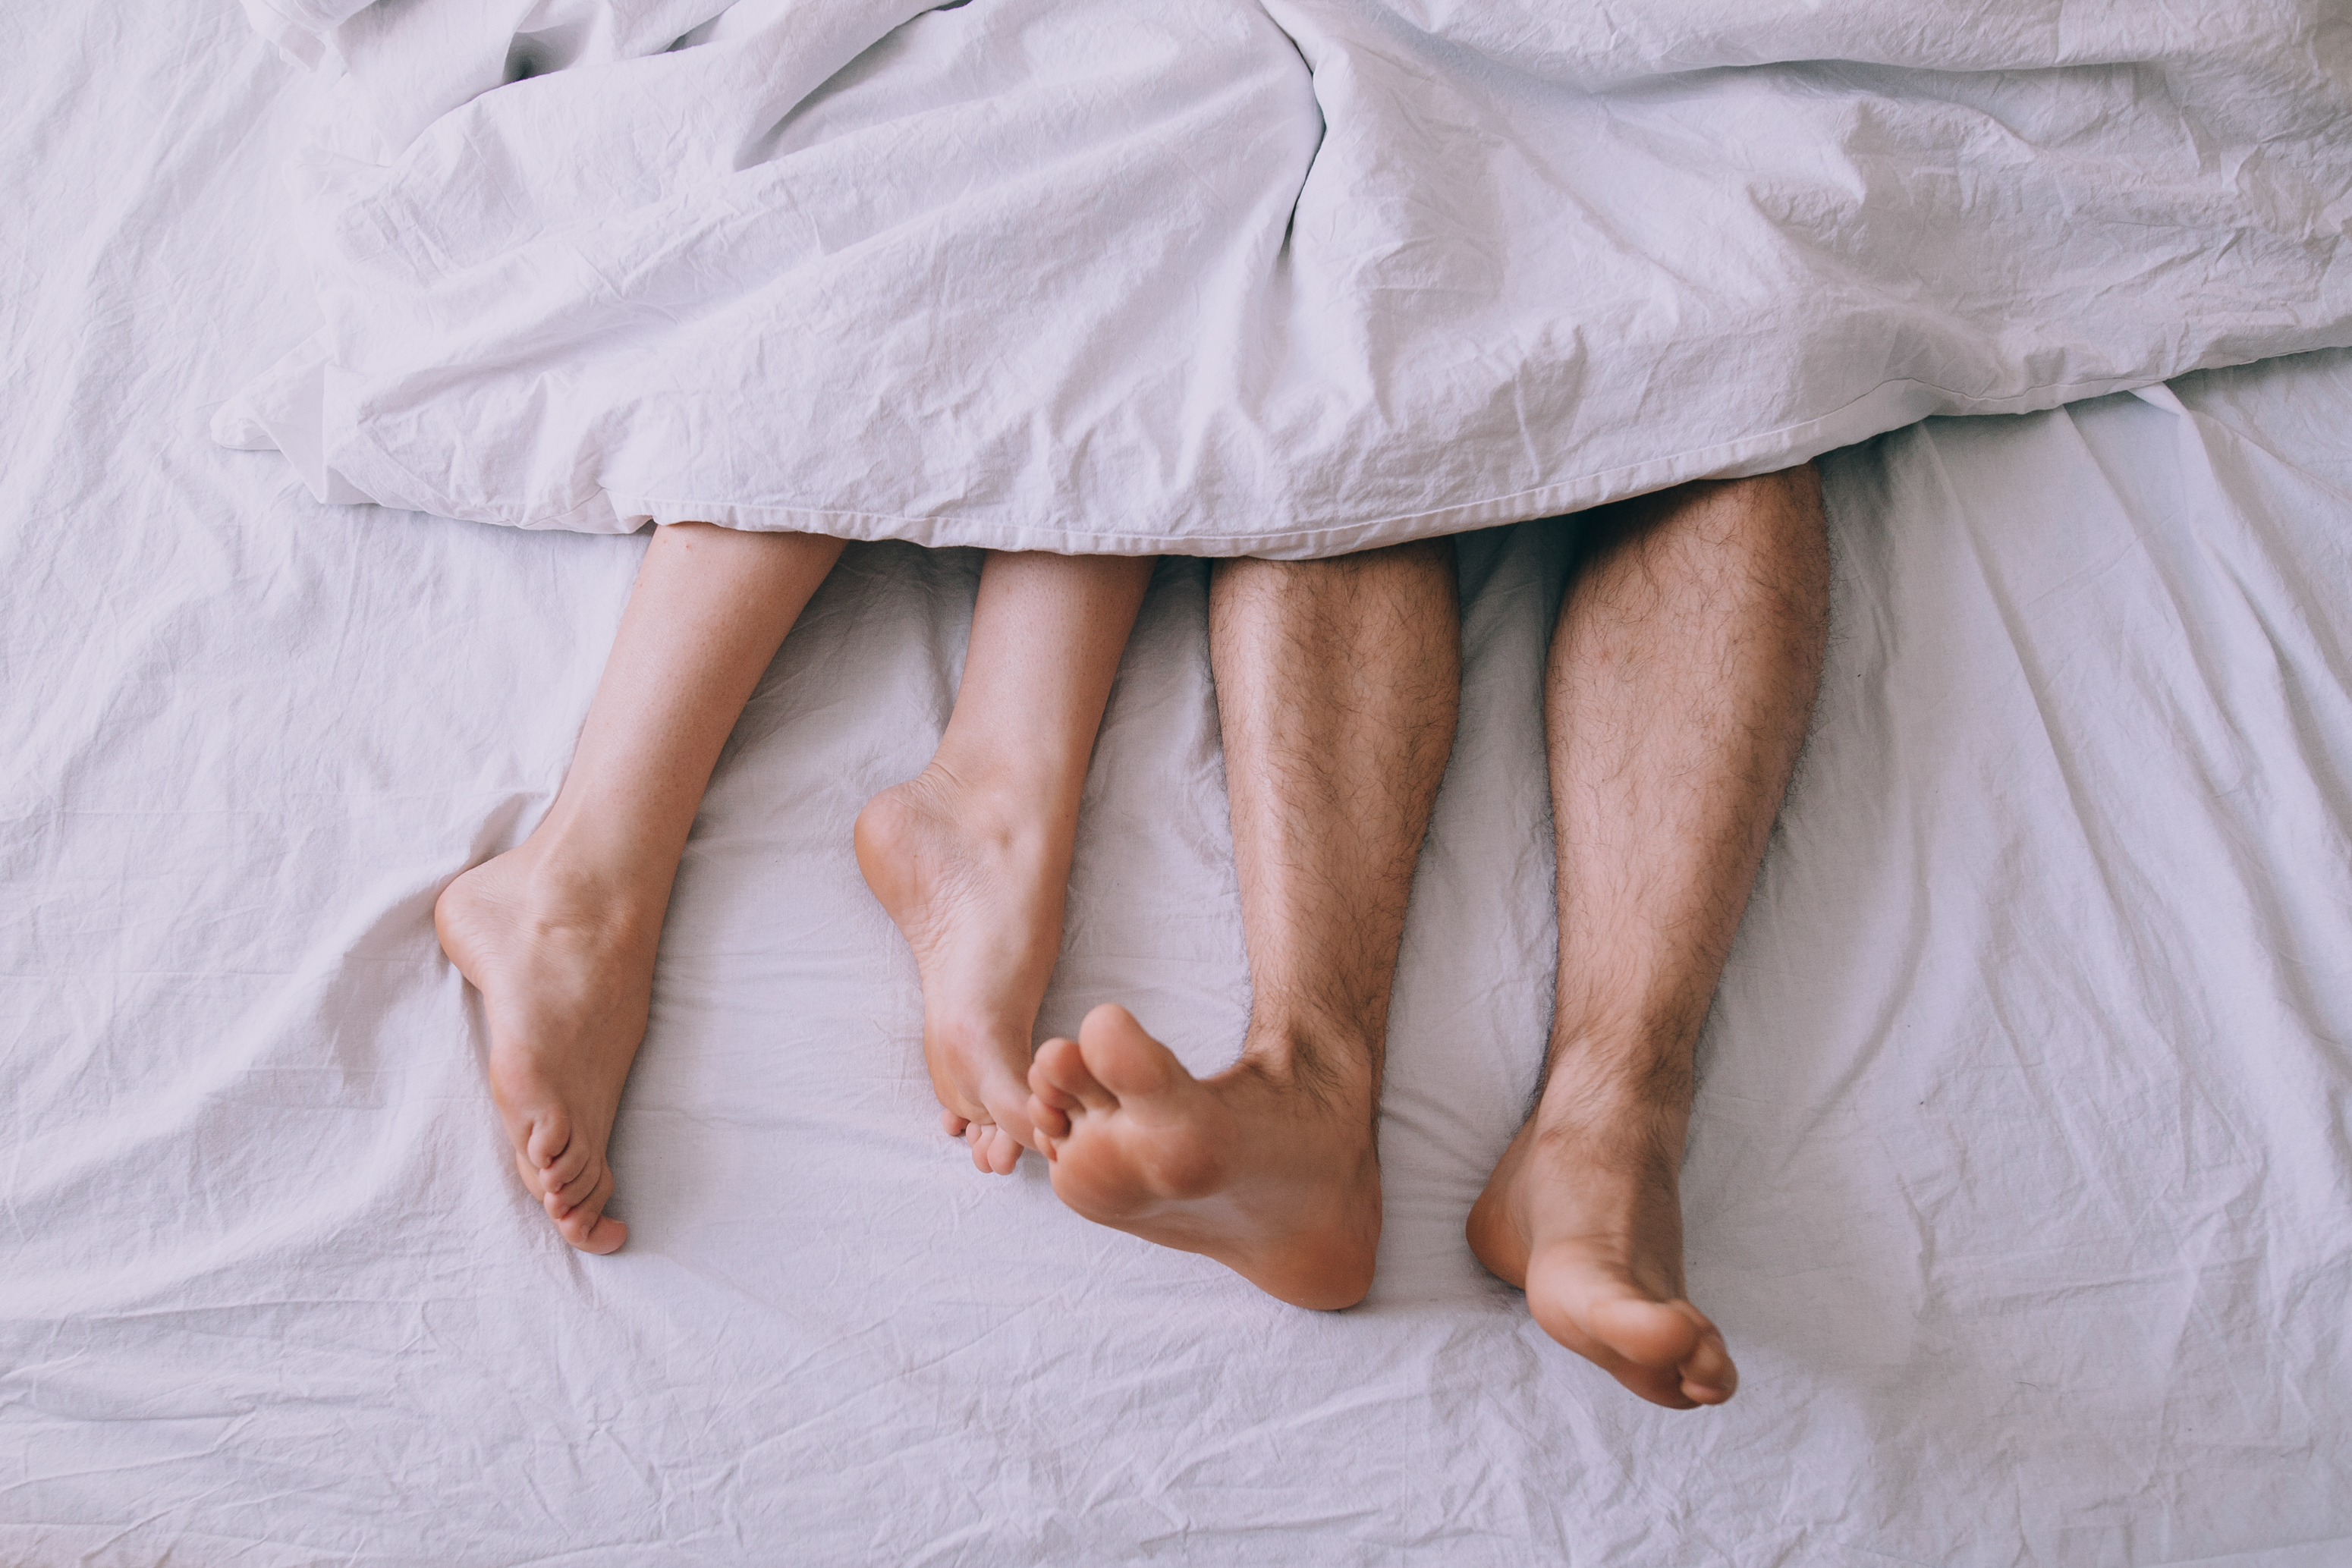 Feet of couple side by side in bed | Source: Shutterstock